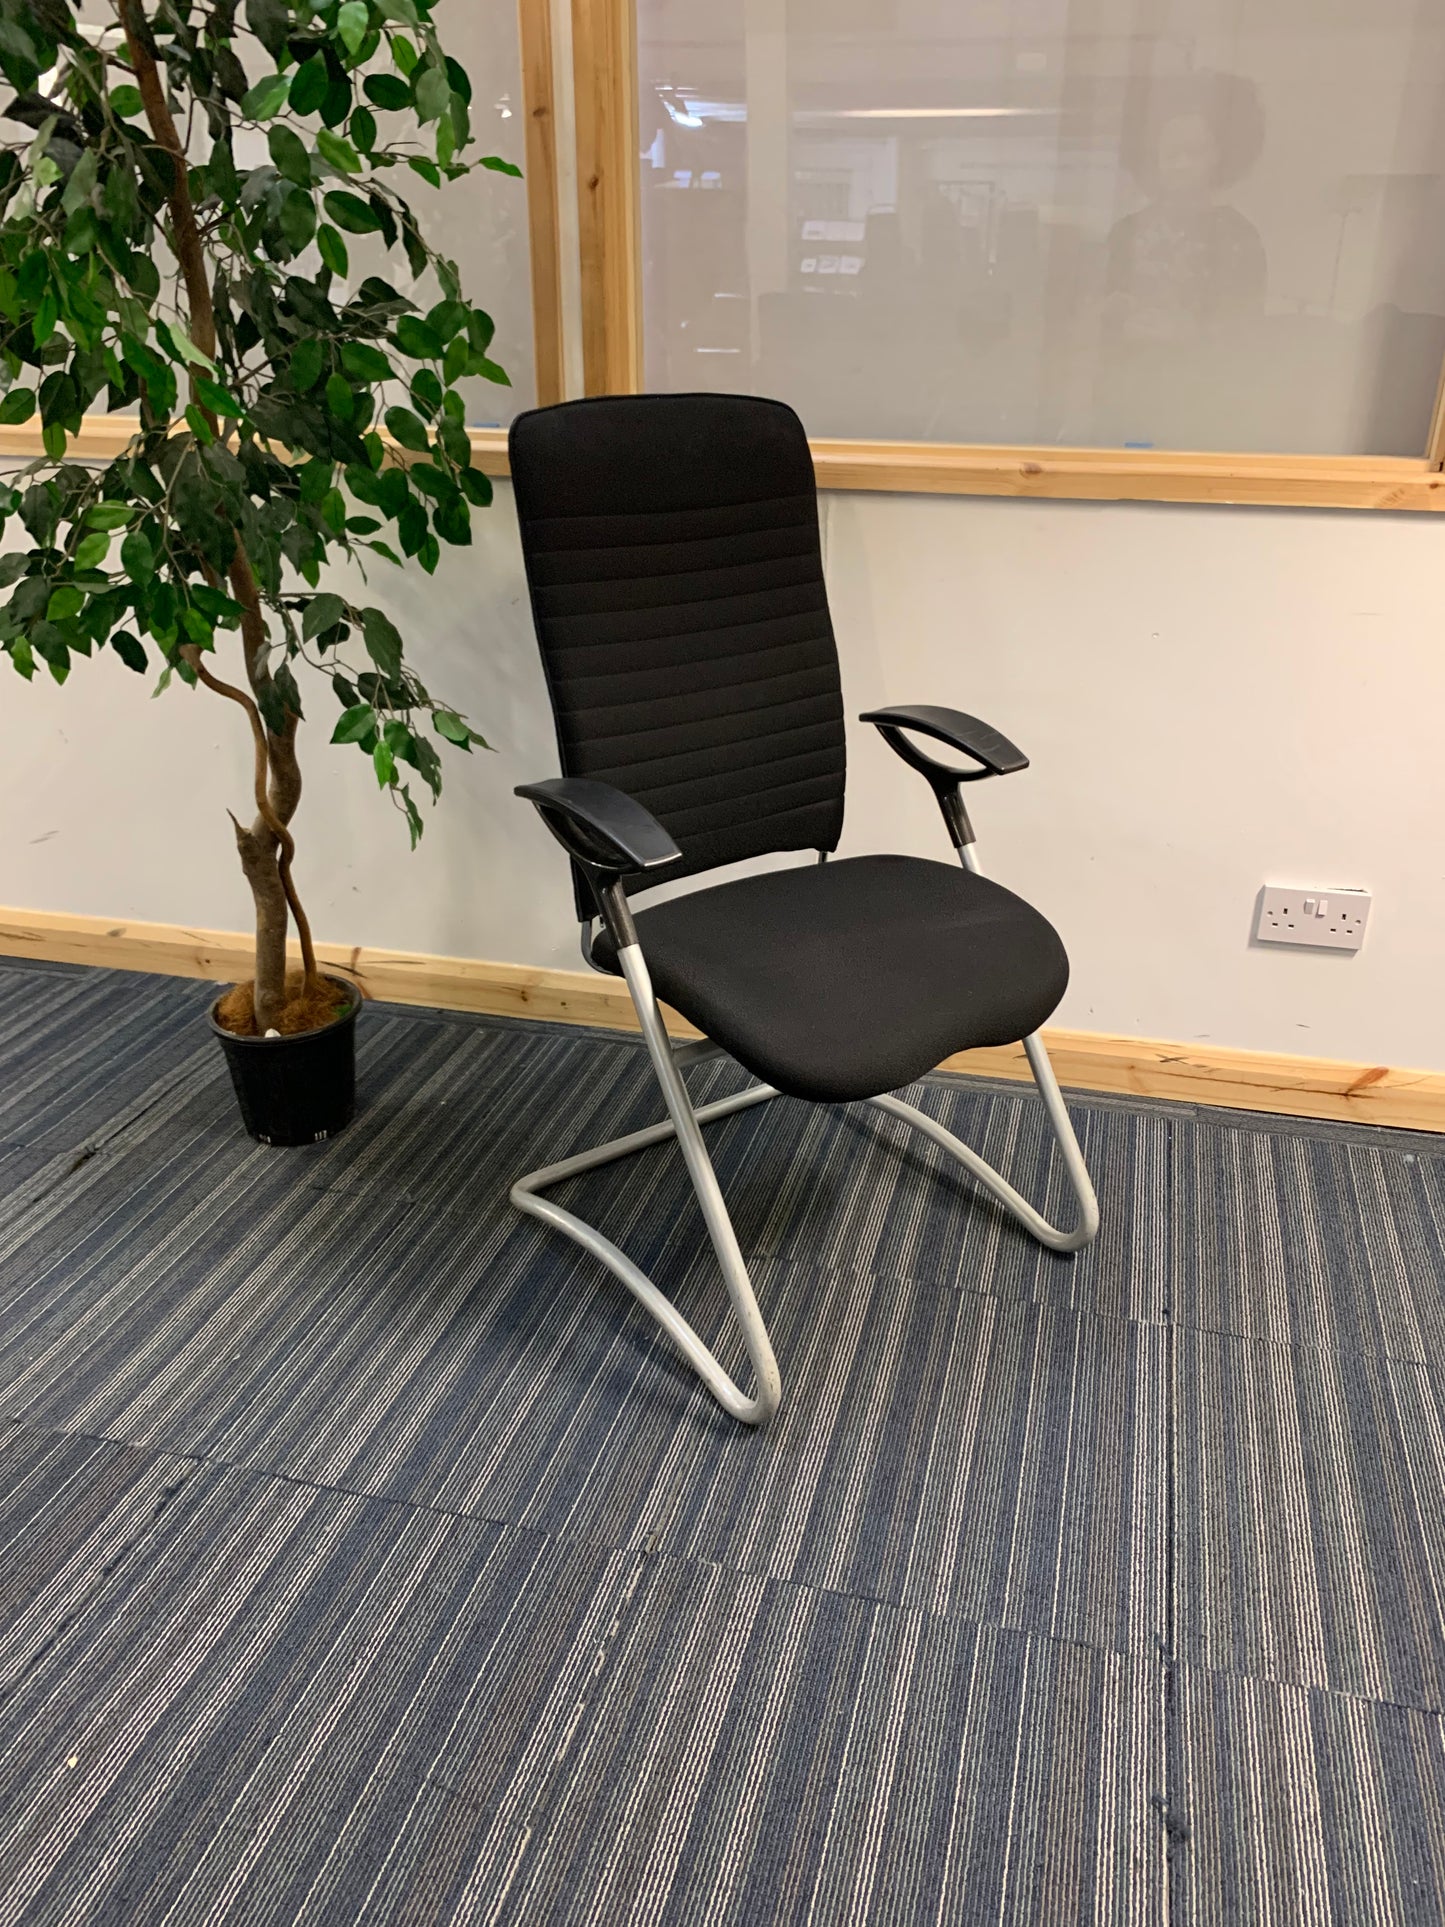 Single Black High back executive chair, left, tall green plant